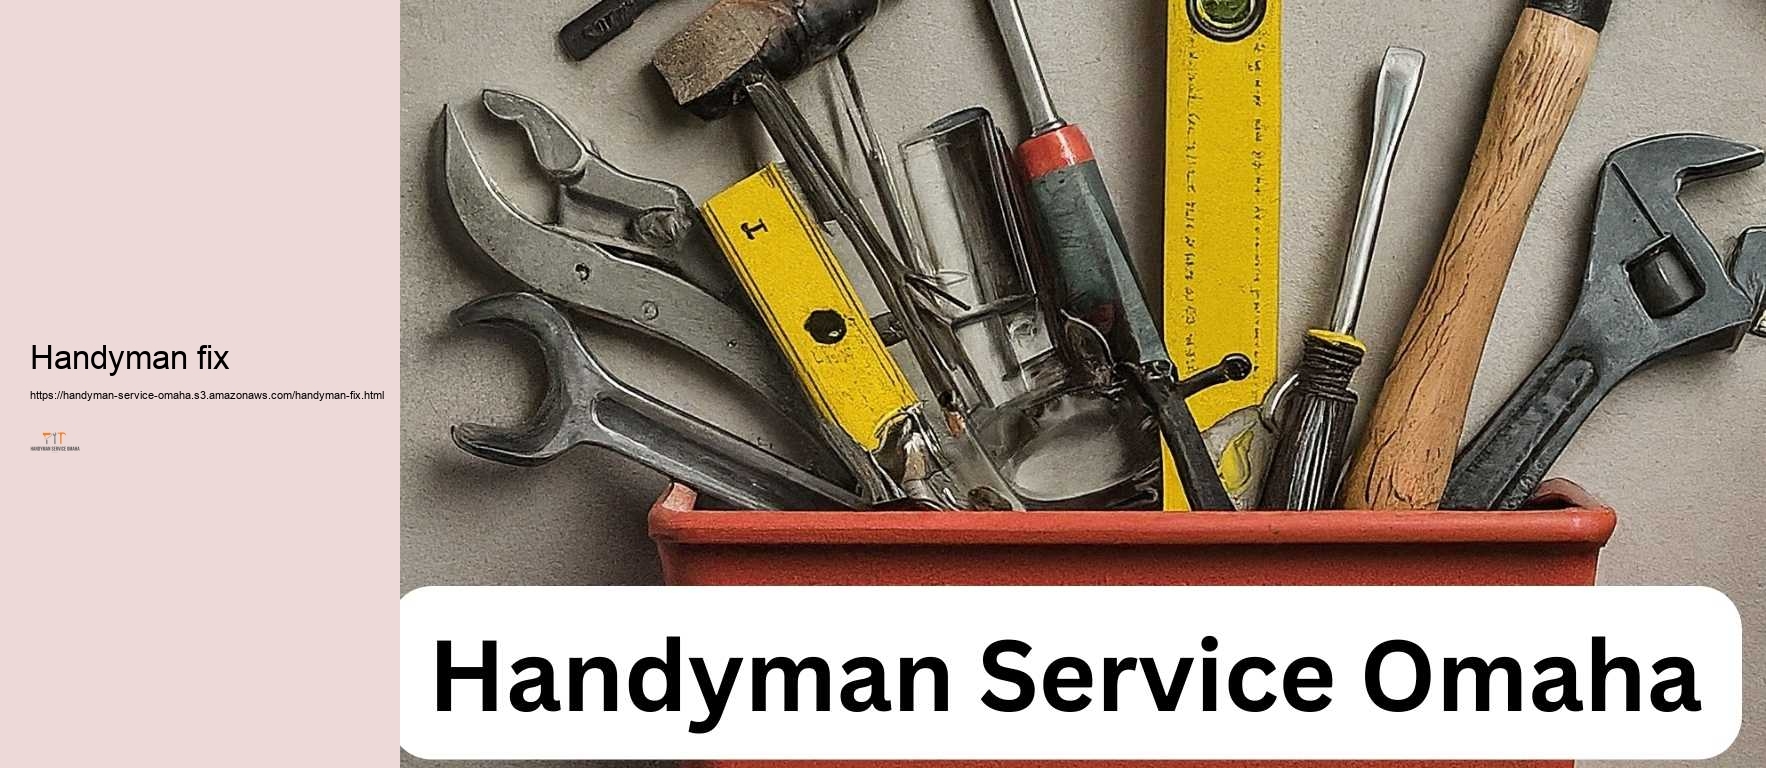 Handyman fix